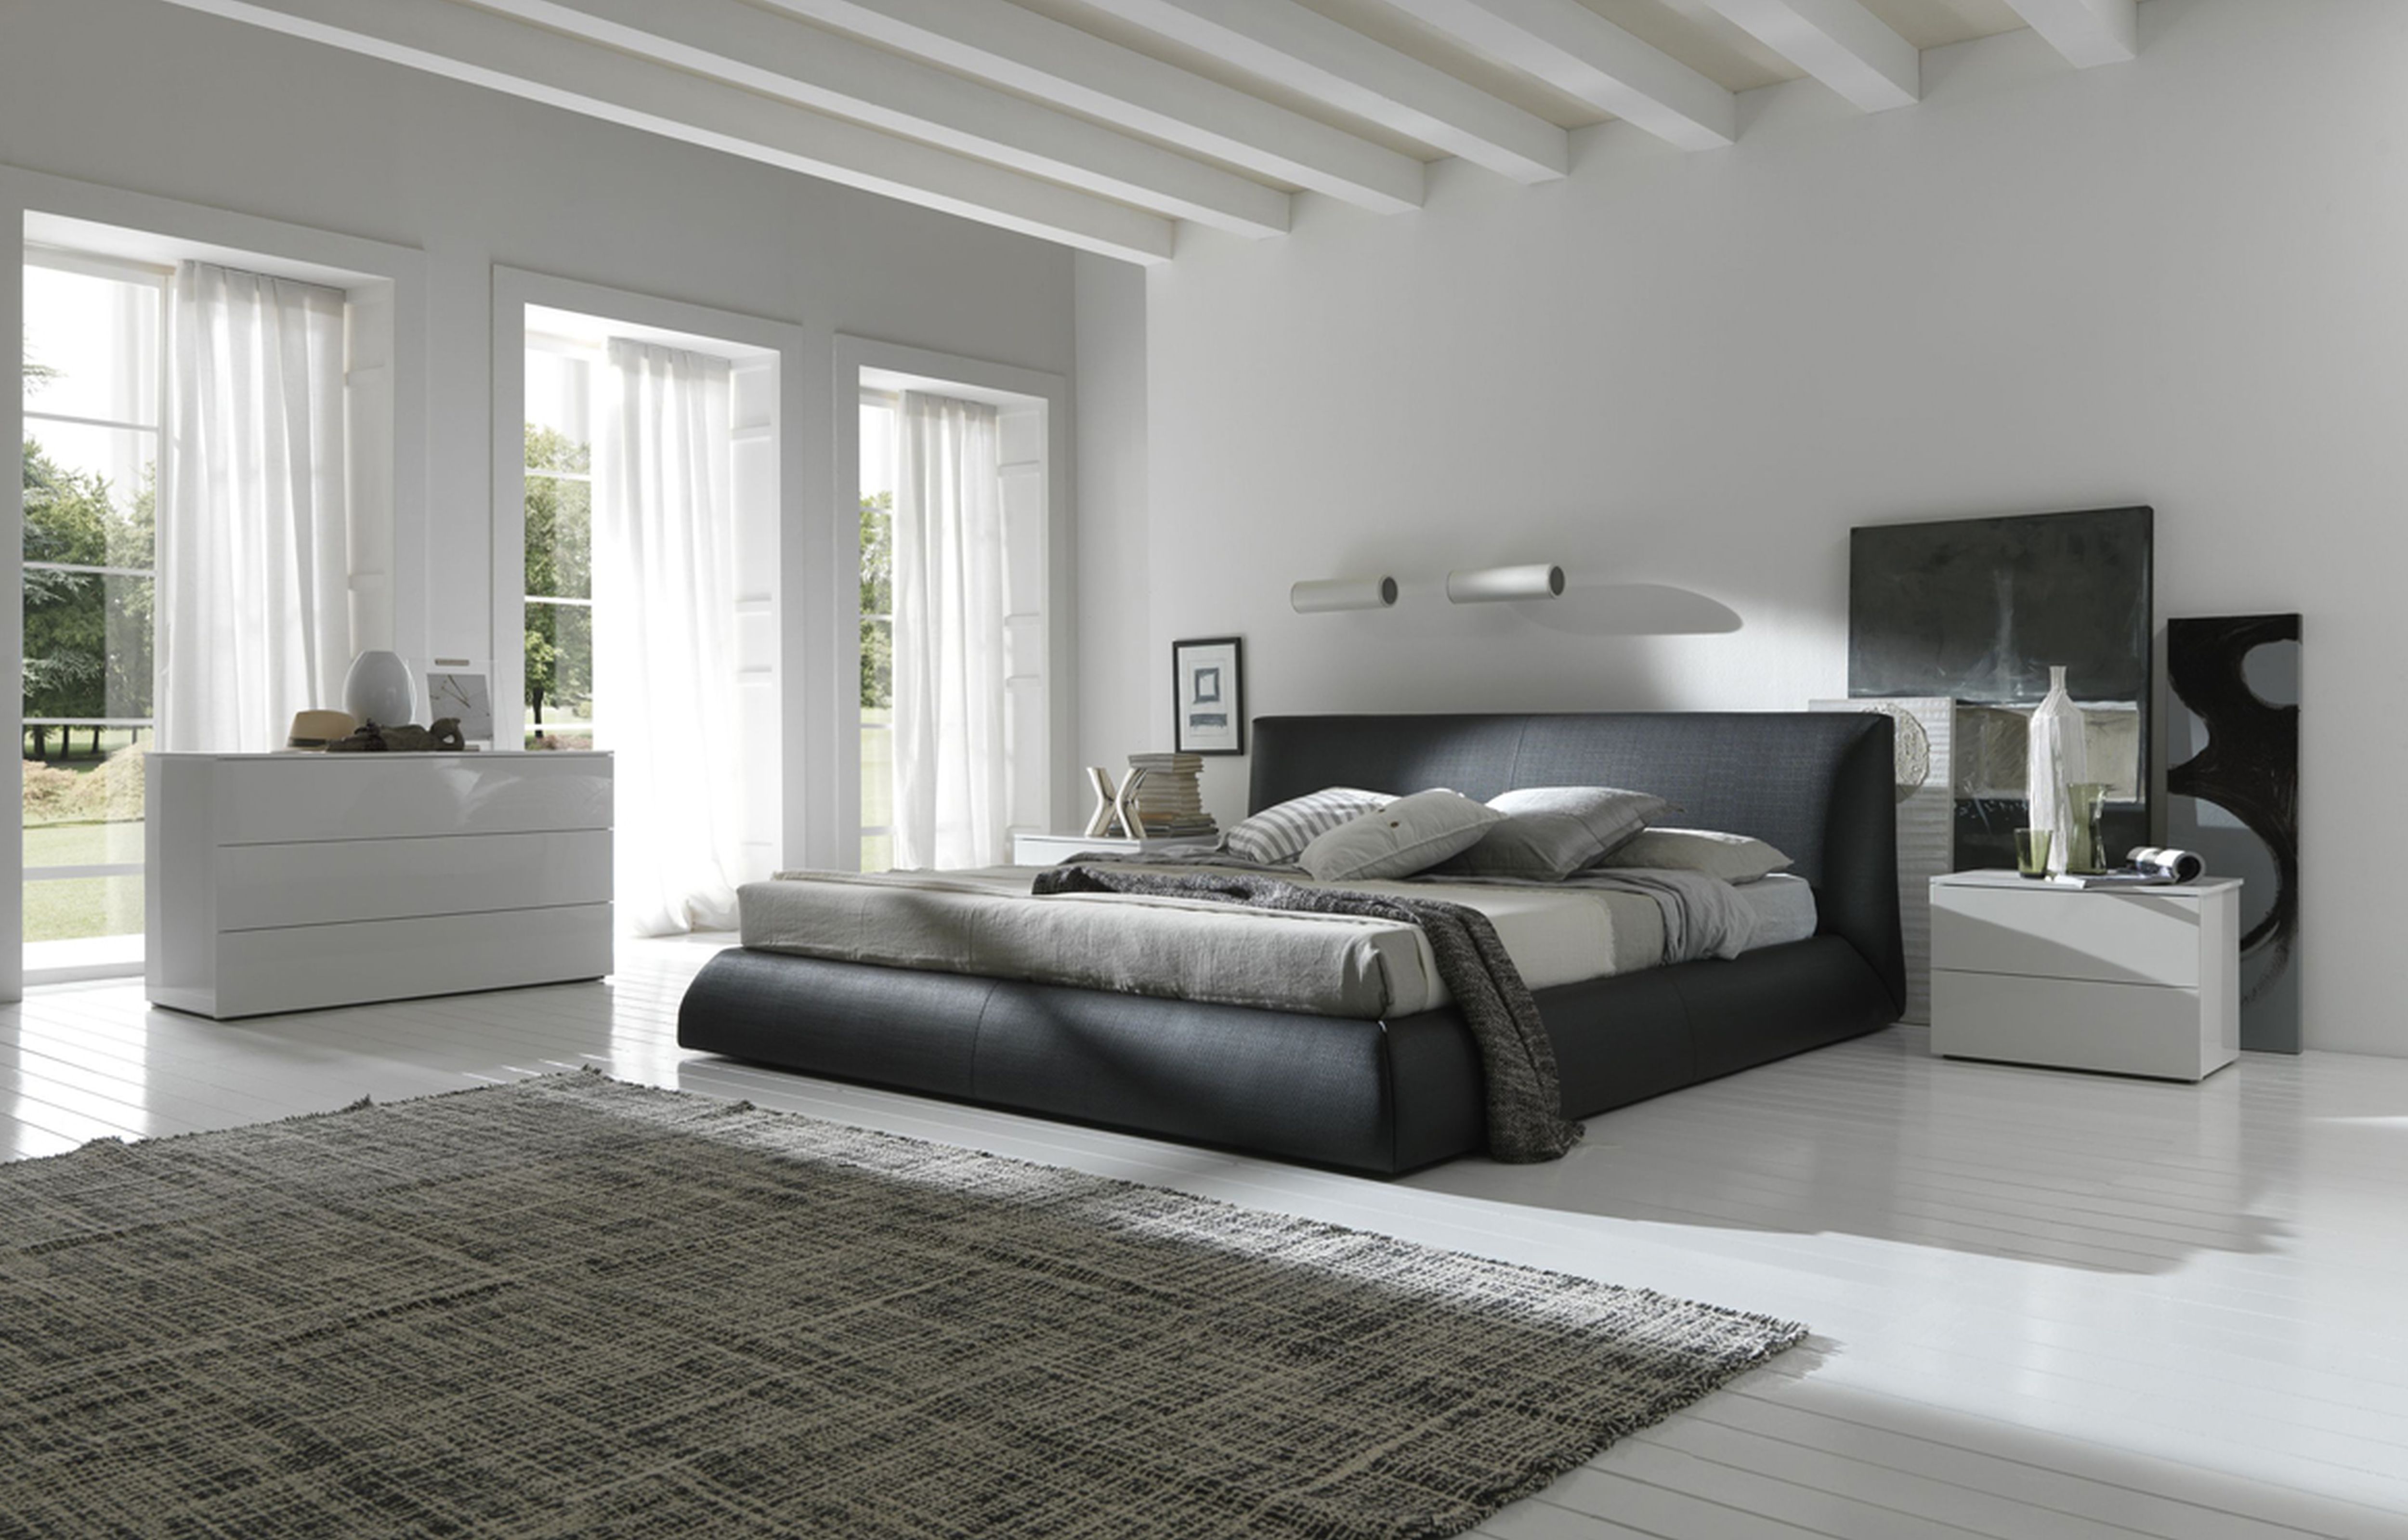 bedroom furniture modern style